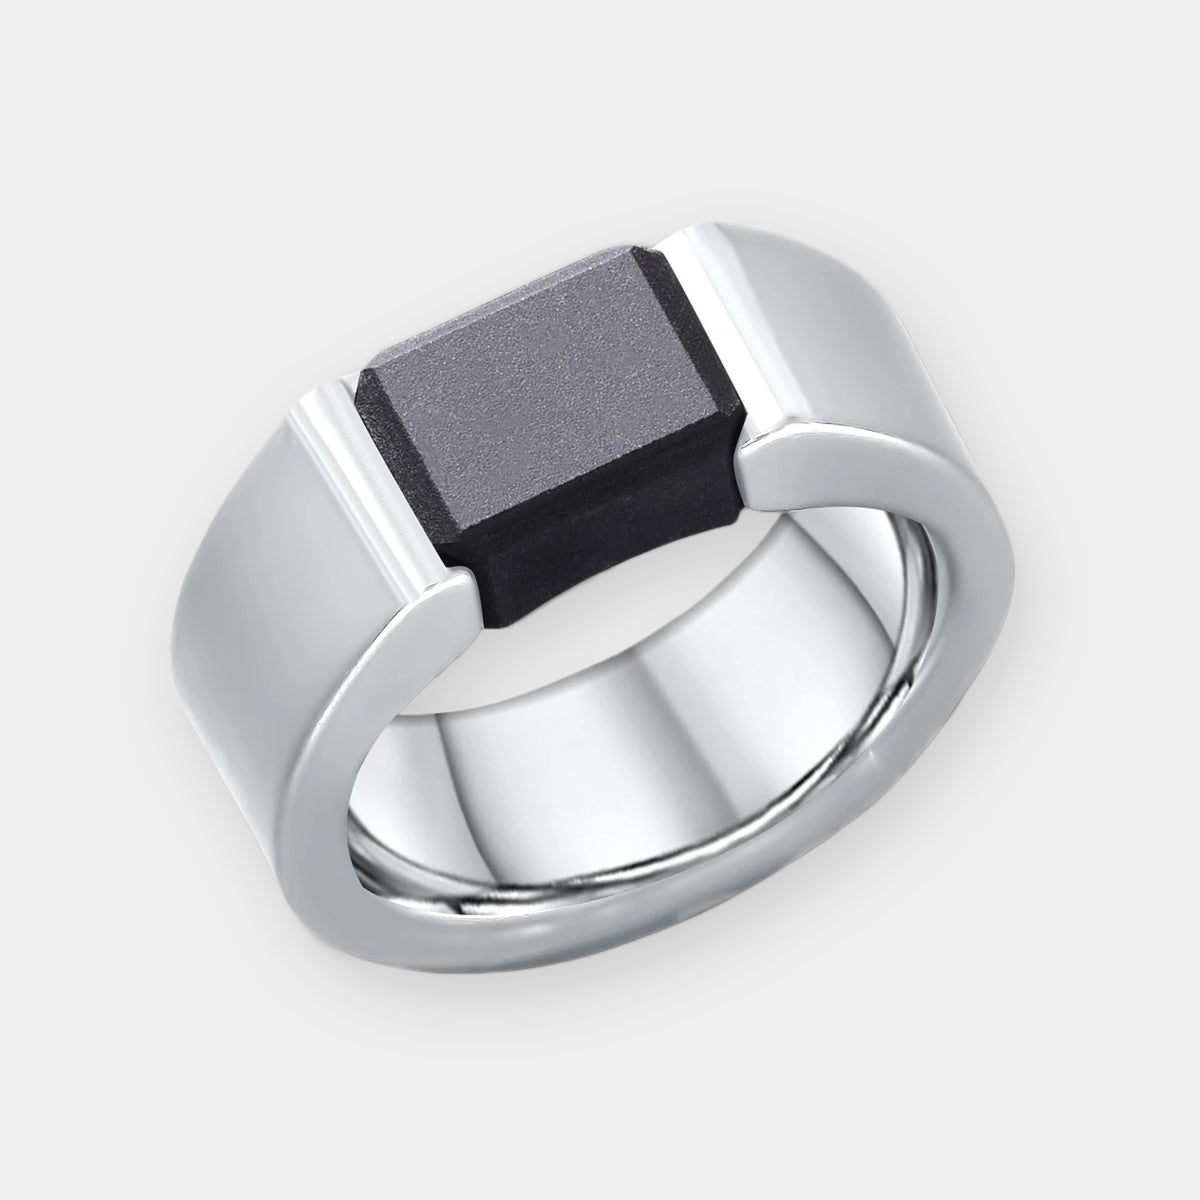 Titanium Ring with a Tension-Set Solid Black Diamond Stone on White Background | Elysium Black Diamond Ring - Hercules 8mm | Diamond Dust Ring | Products | Image 1